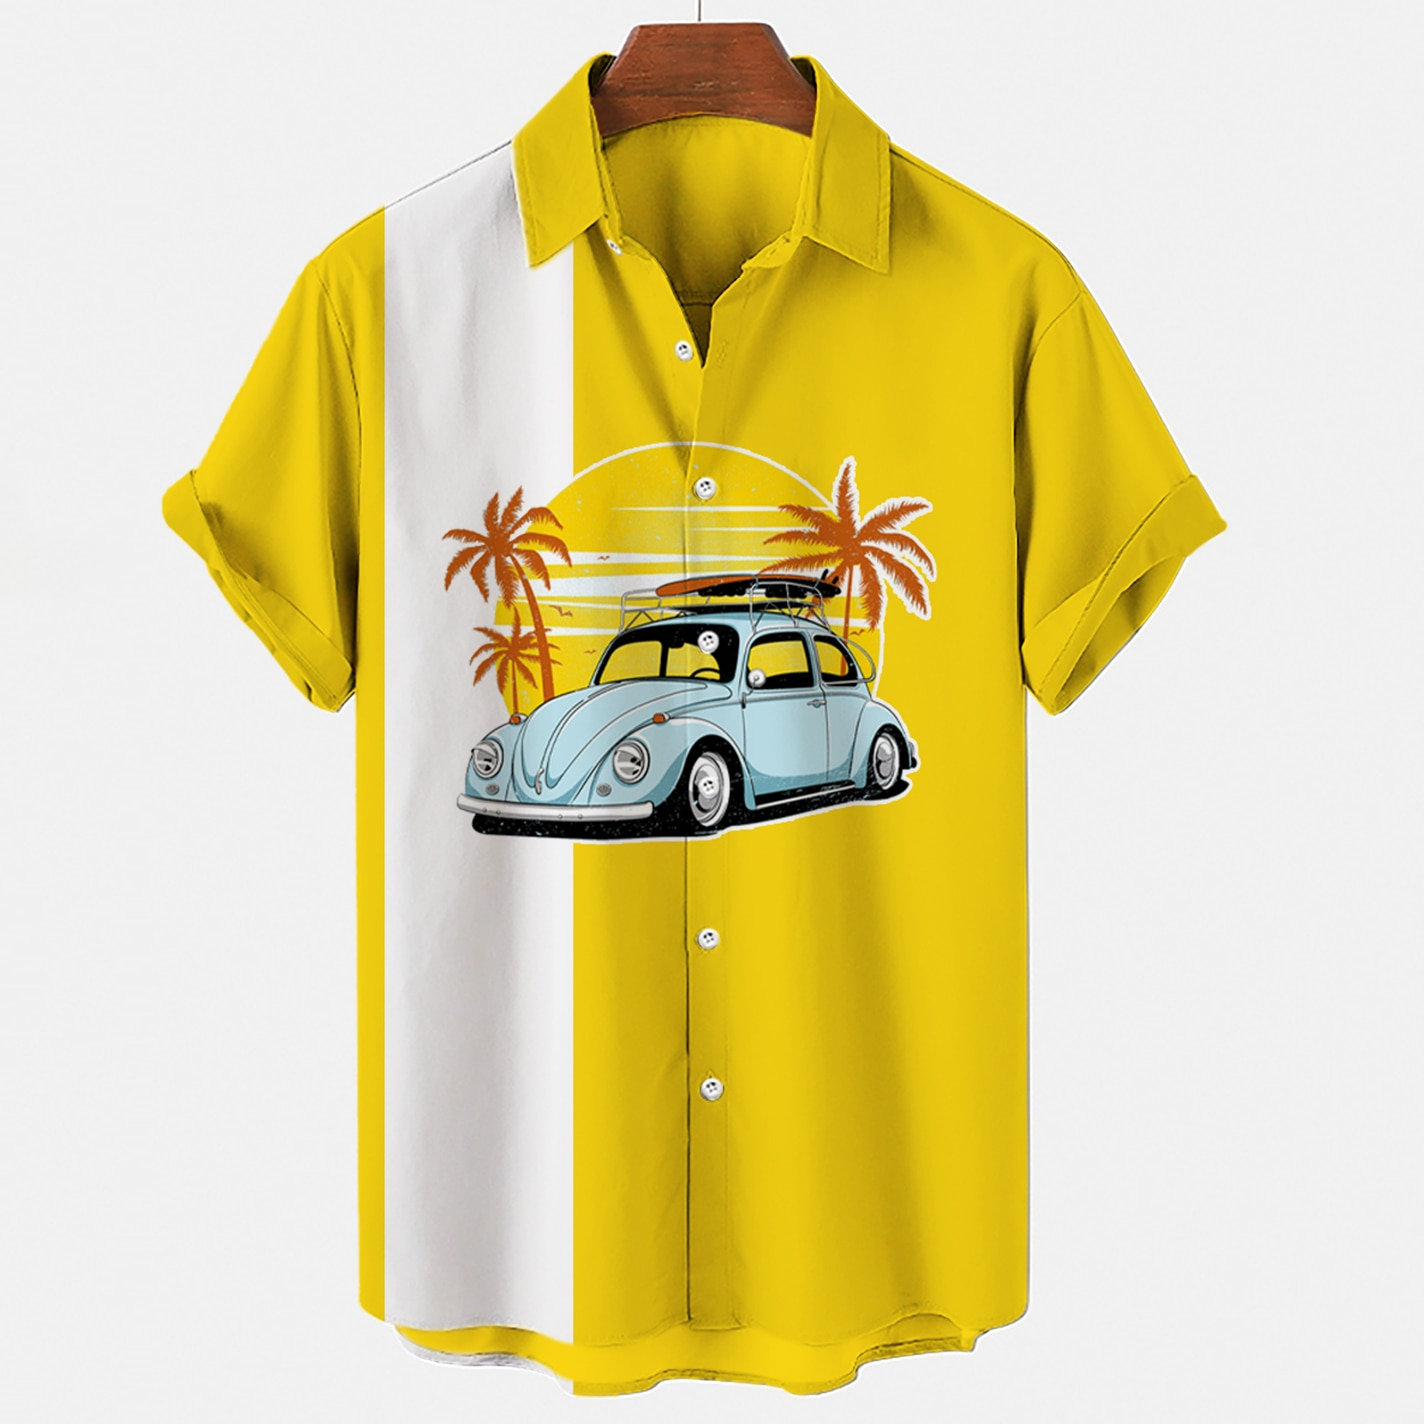 Men's Hawaiian Summer Beach Shirt - Yellow Striped Tree Car Print